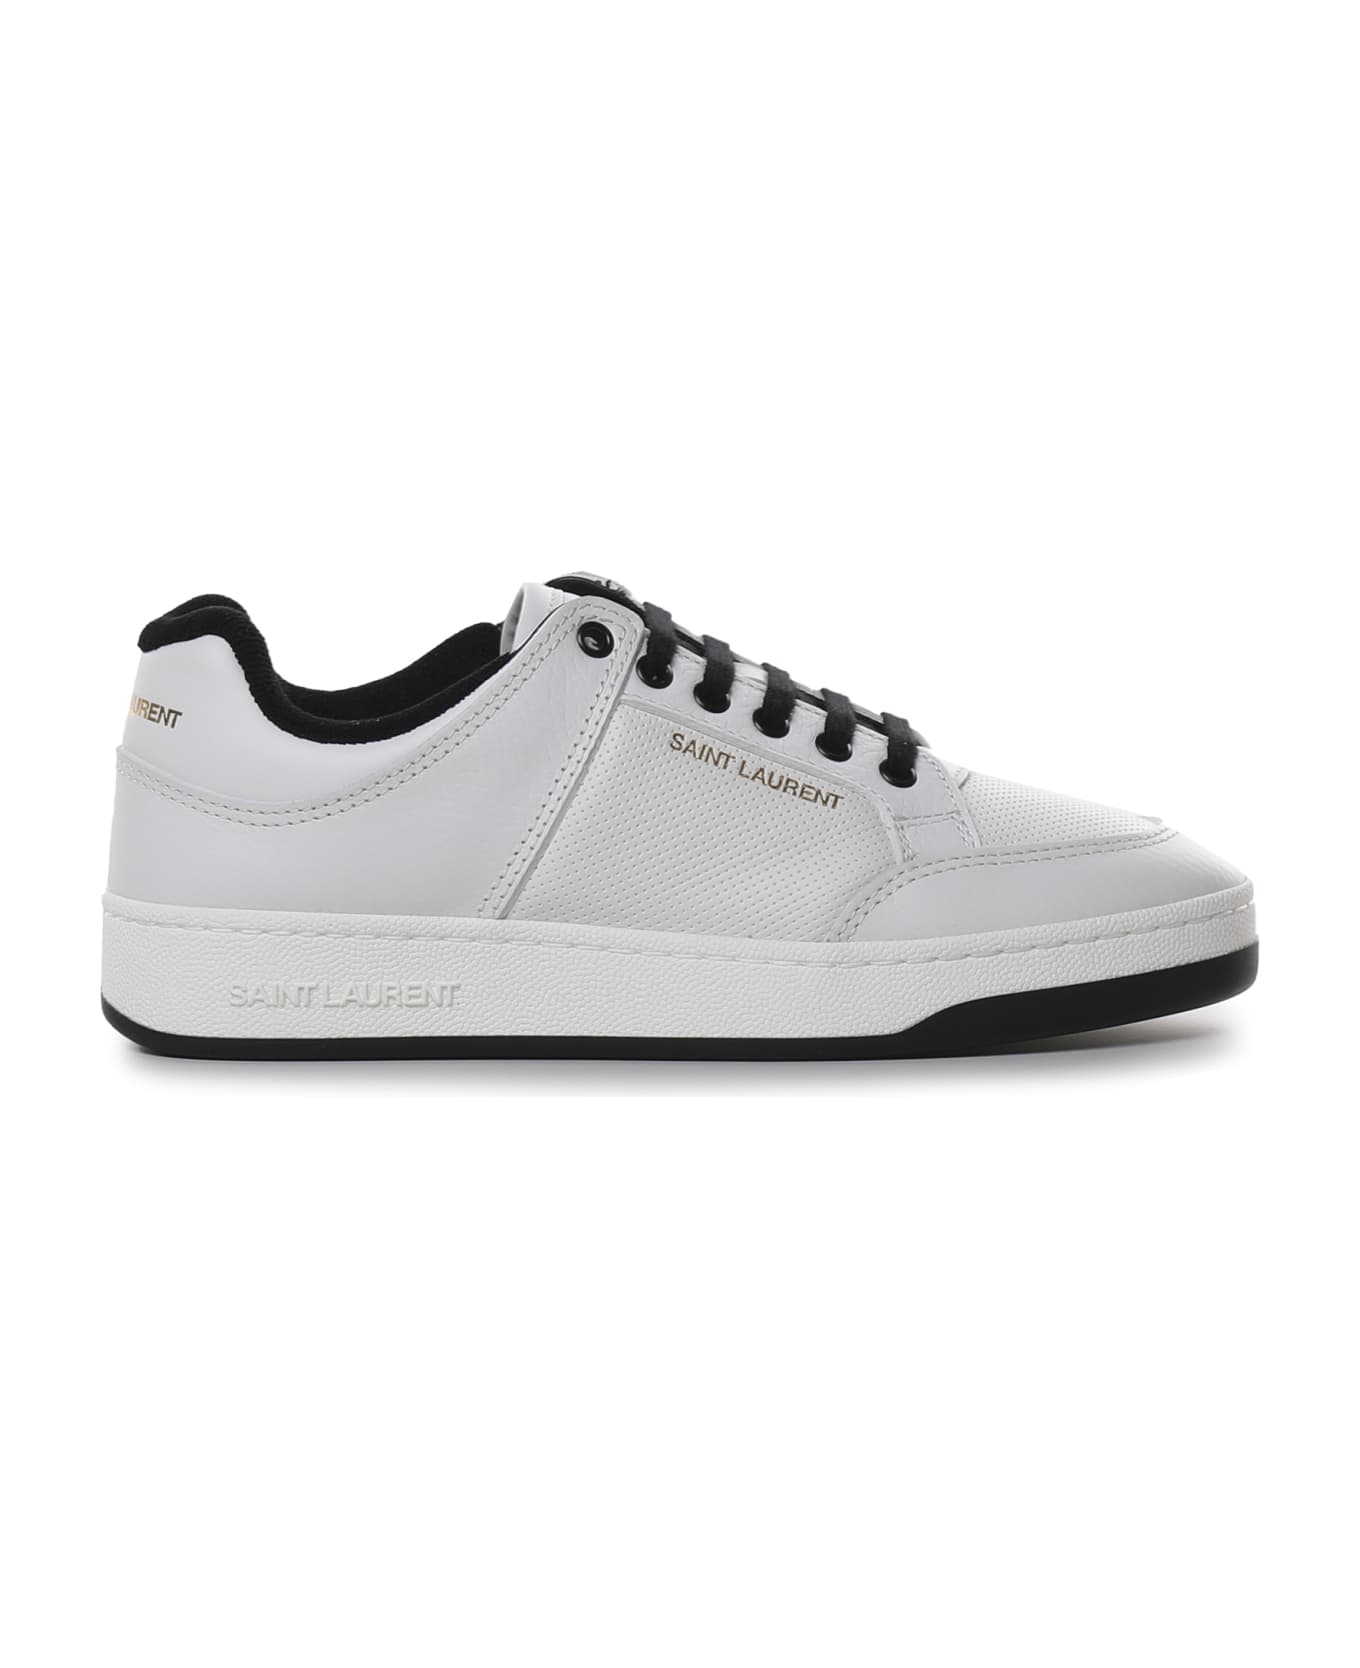 Saint Laurent Low Sneakers - White